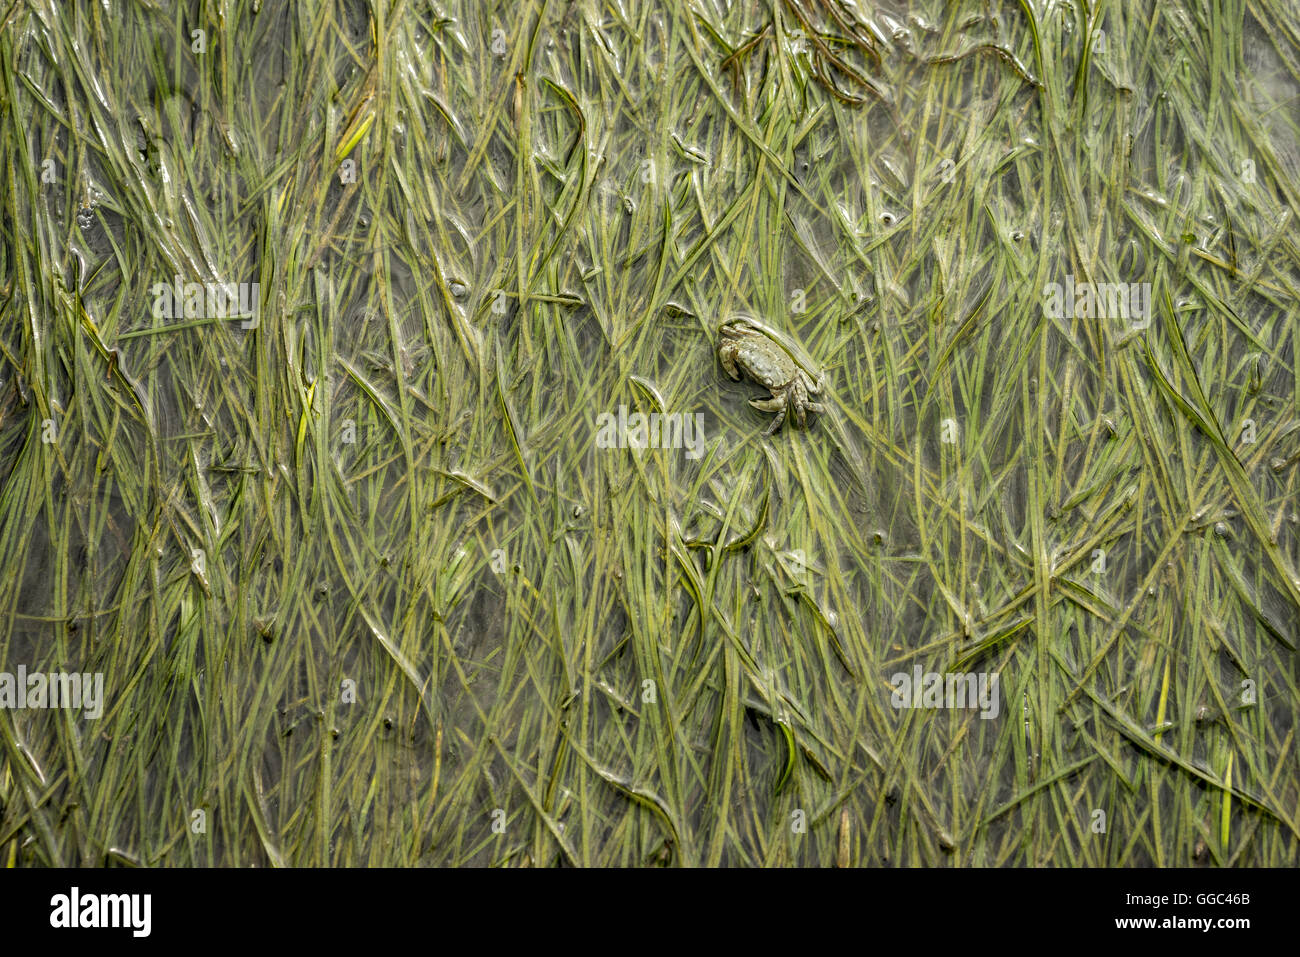 Grüne Ufer Krabbe in einem Bett aus Seegras bei Ebbe Stockfotografie - Alamy